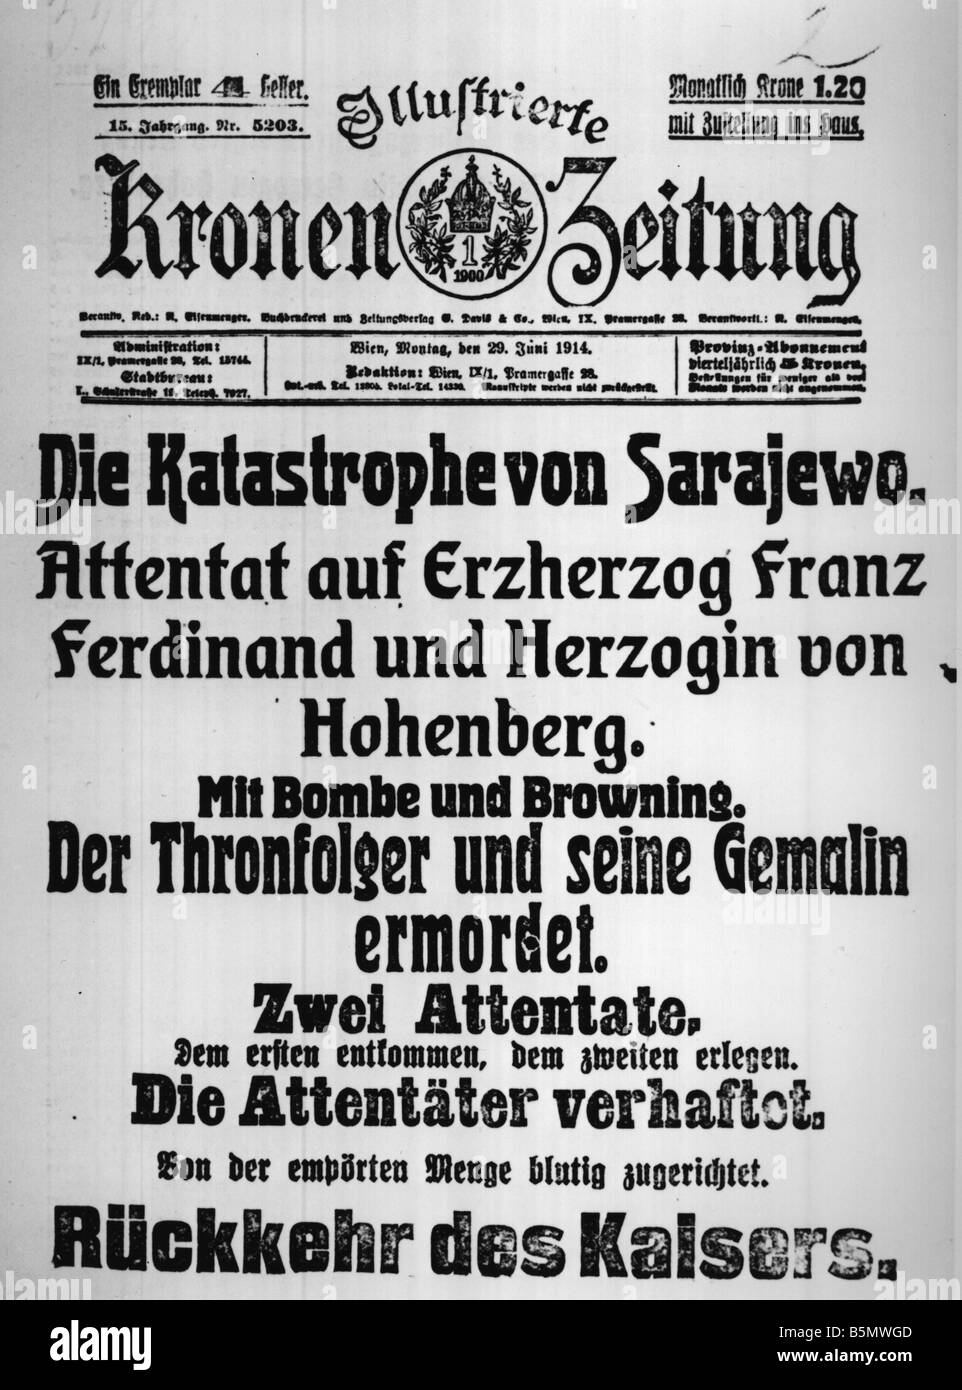 9OE 1914 6 28 E1 1 Assassin Sarajevo 1914 Kronen Zeitung Prehistory of World War 1 Assassination of Austr Hung heir to the thron Stock Photo